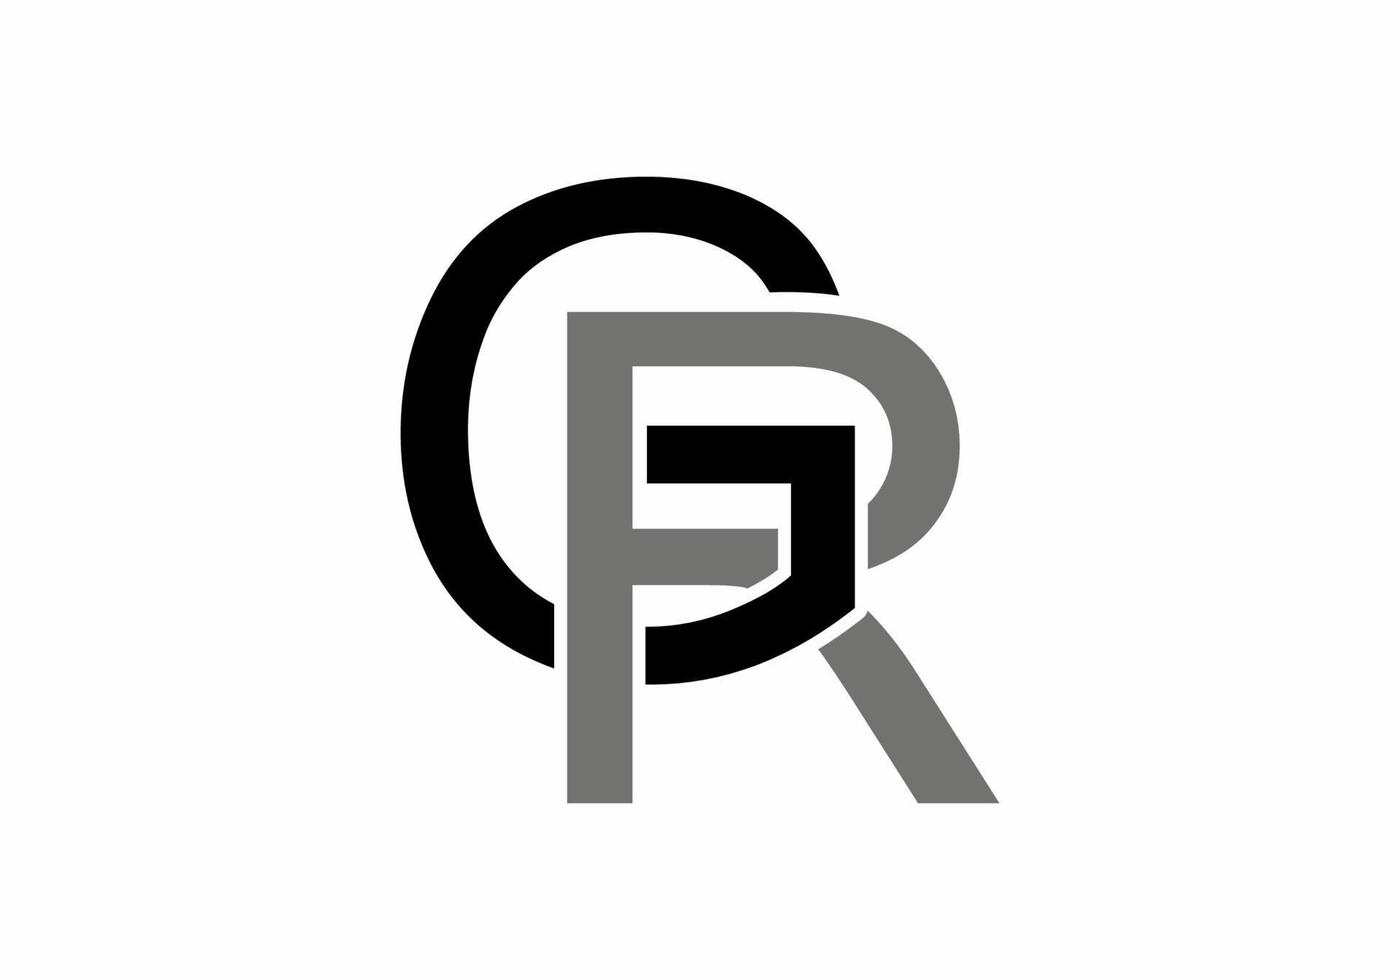 Black grey GR initial letter logo vector